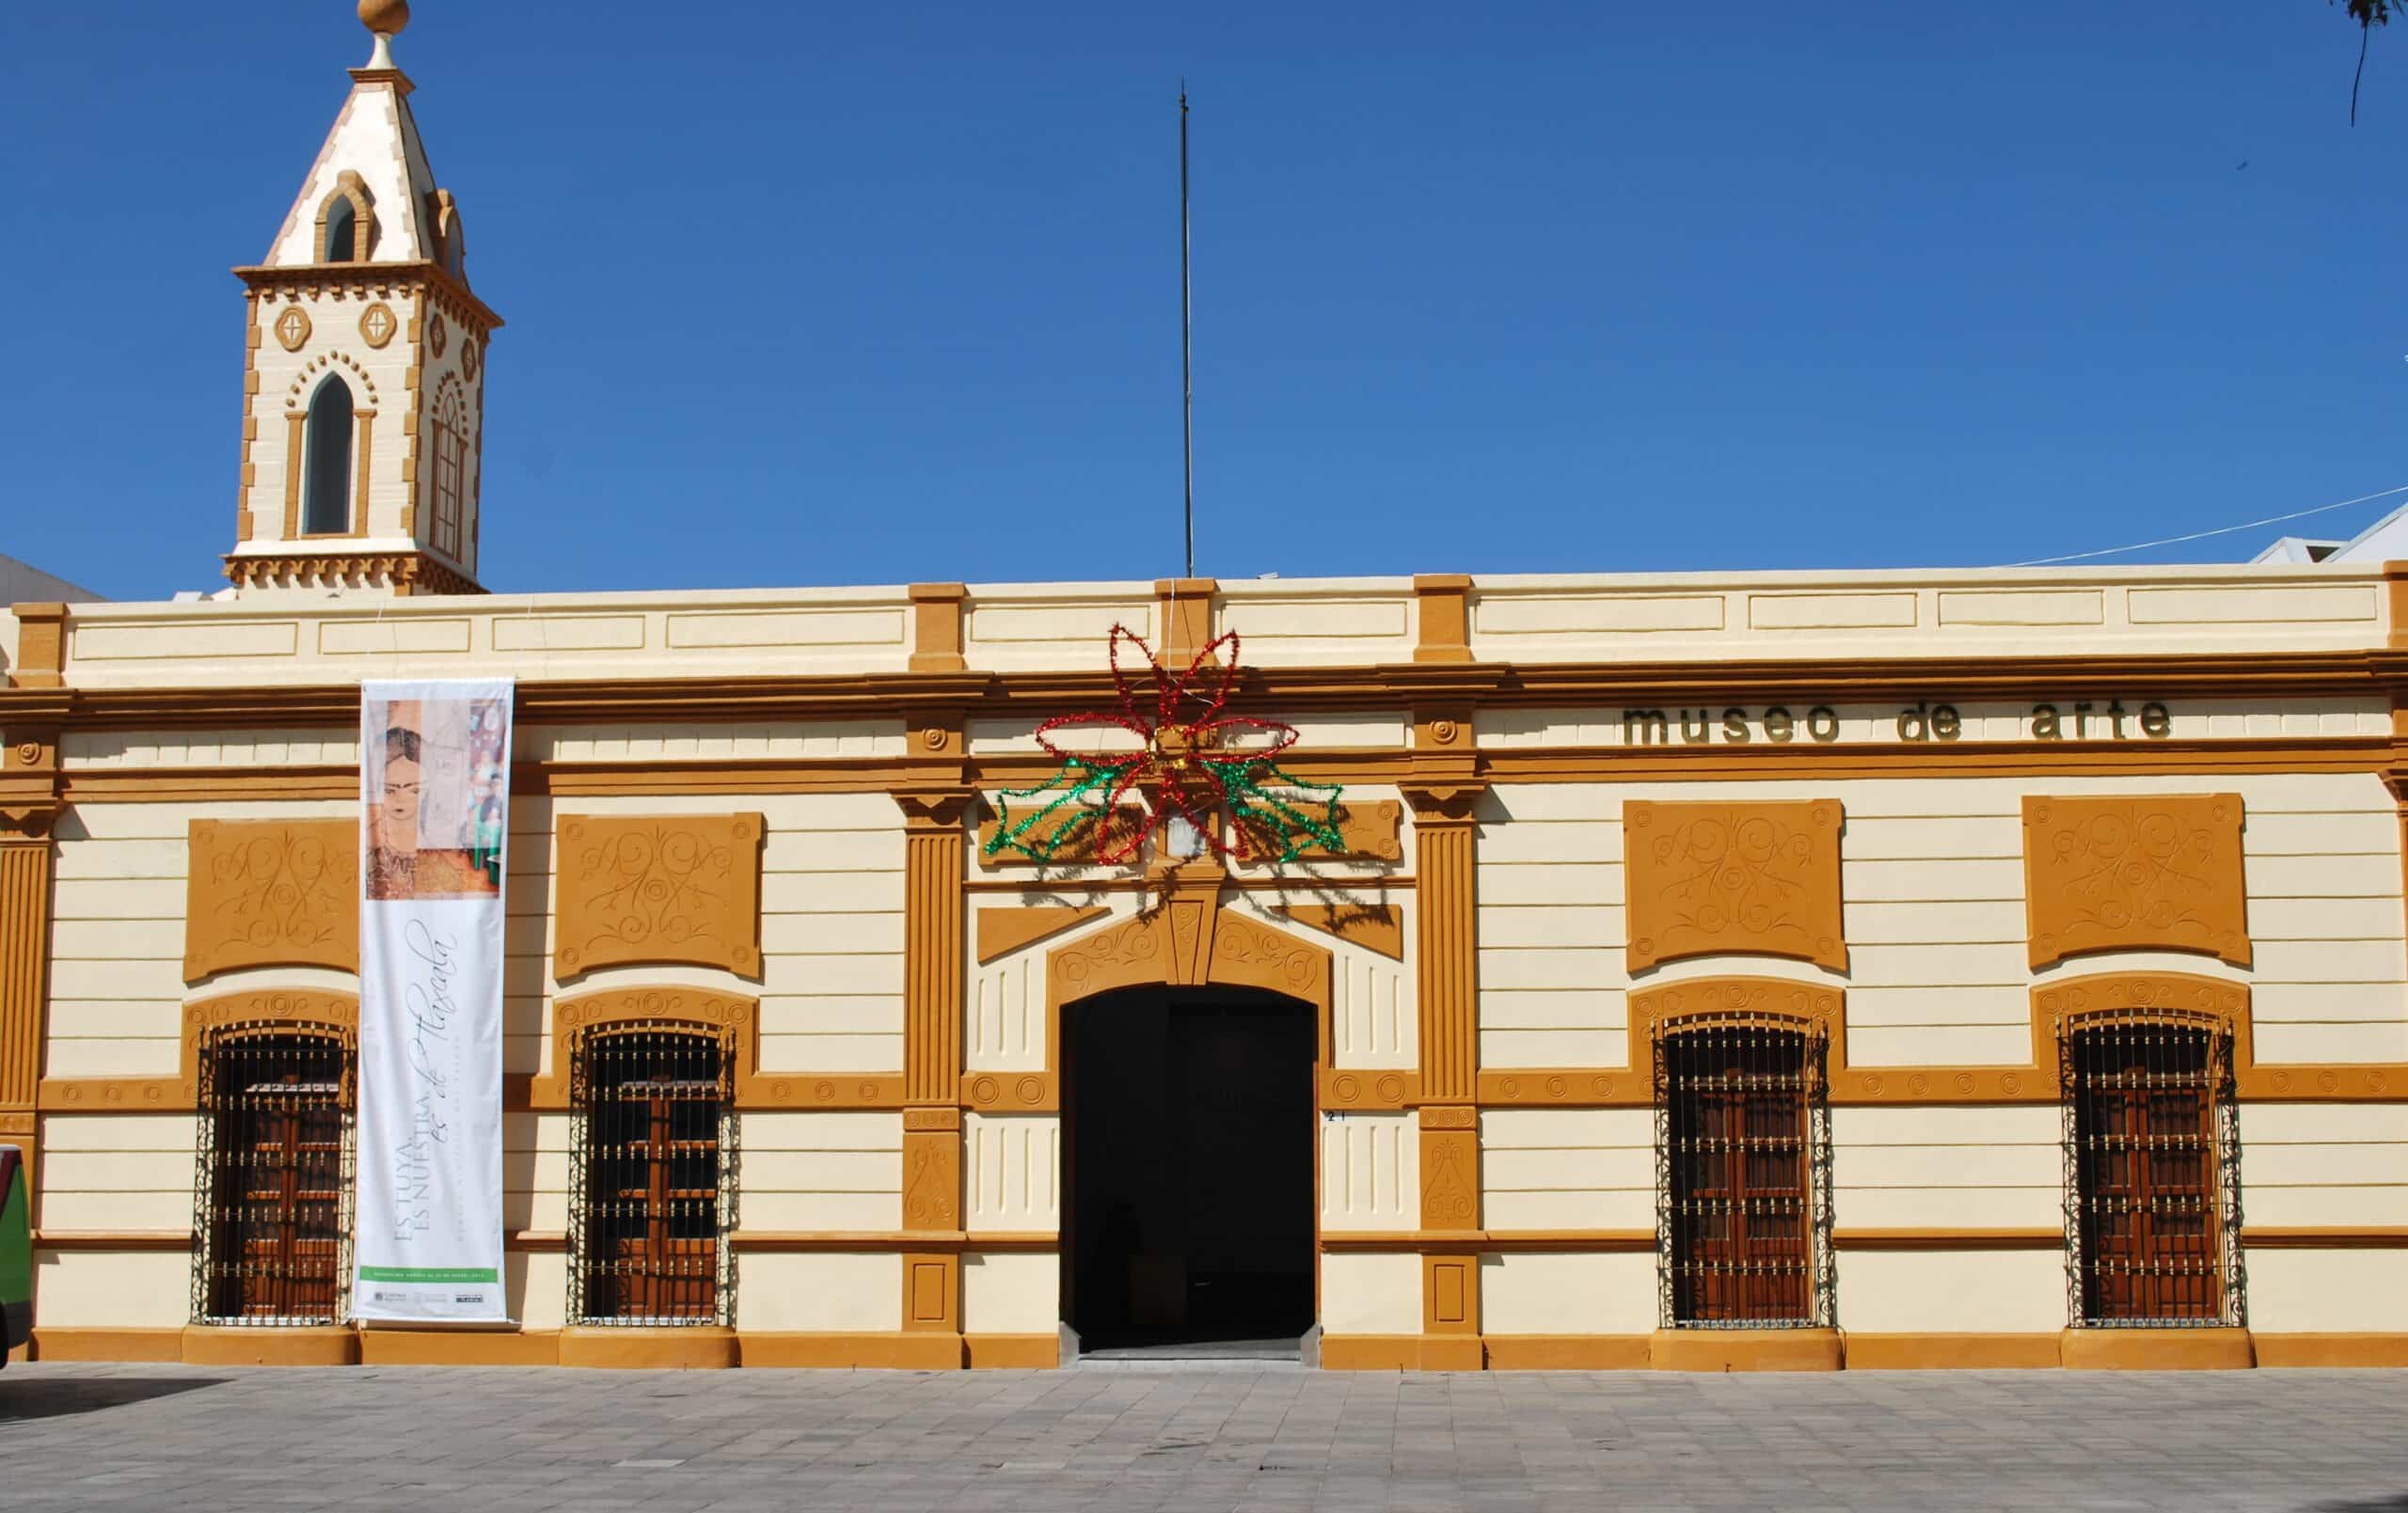 Museo de Arte de Tlaxcala reabre sus puertas con expo de Frida Kahlo